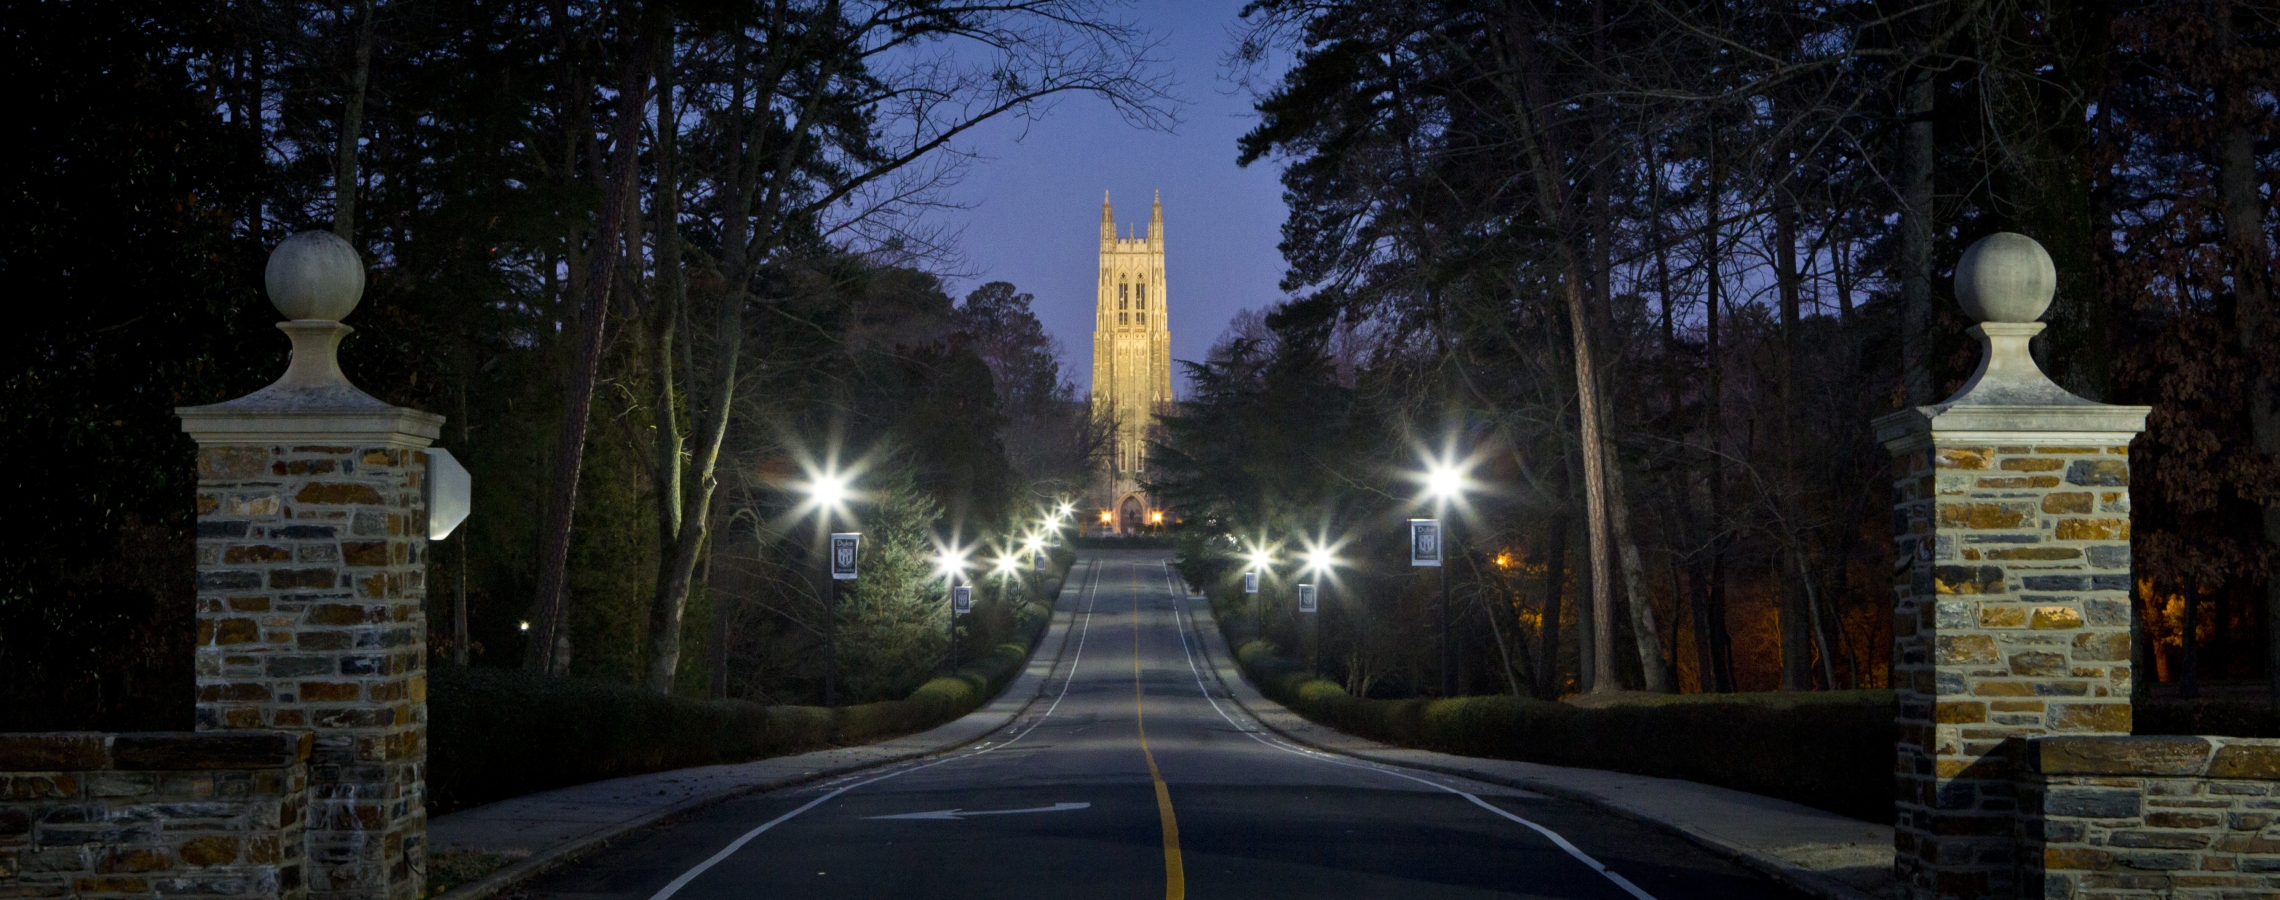 Duke Chapel and Chapel Drive at night